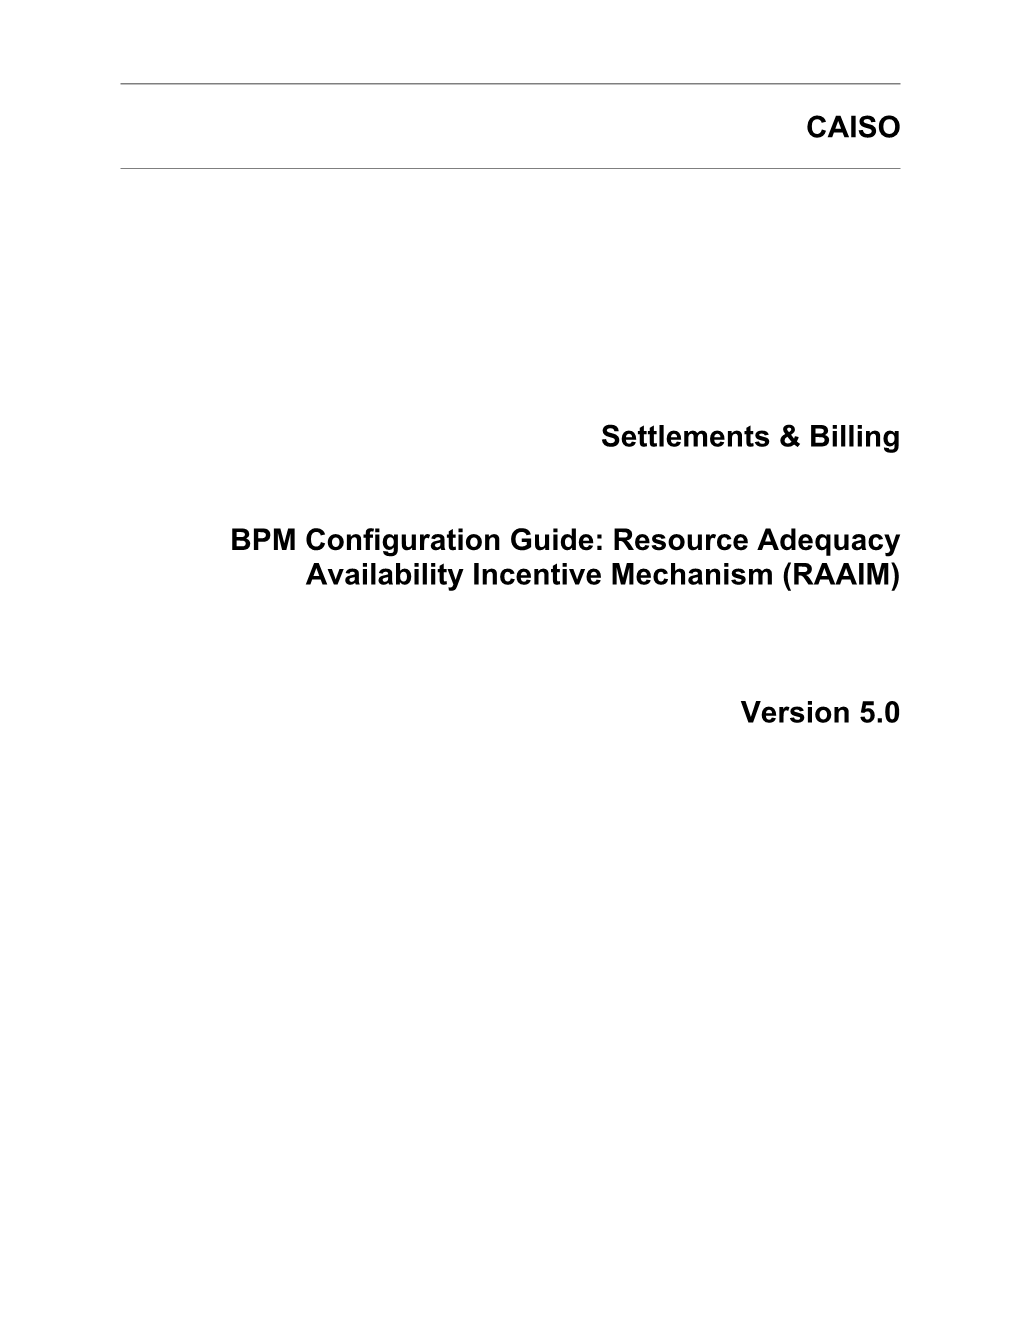 BPM - CG PC RA Availability Incentive Mechanism s1